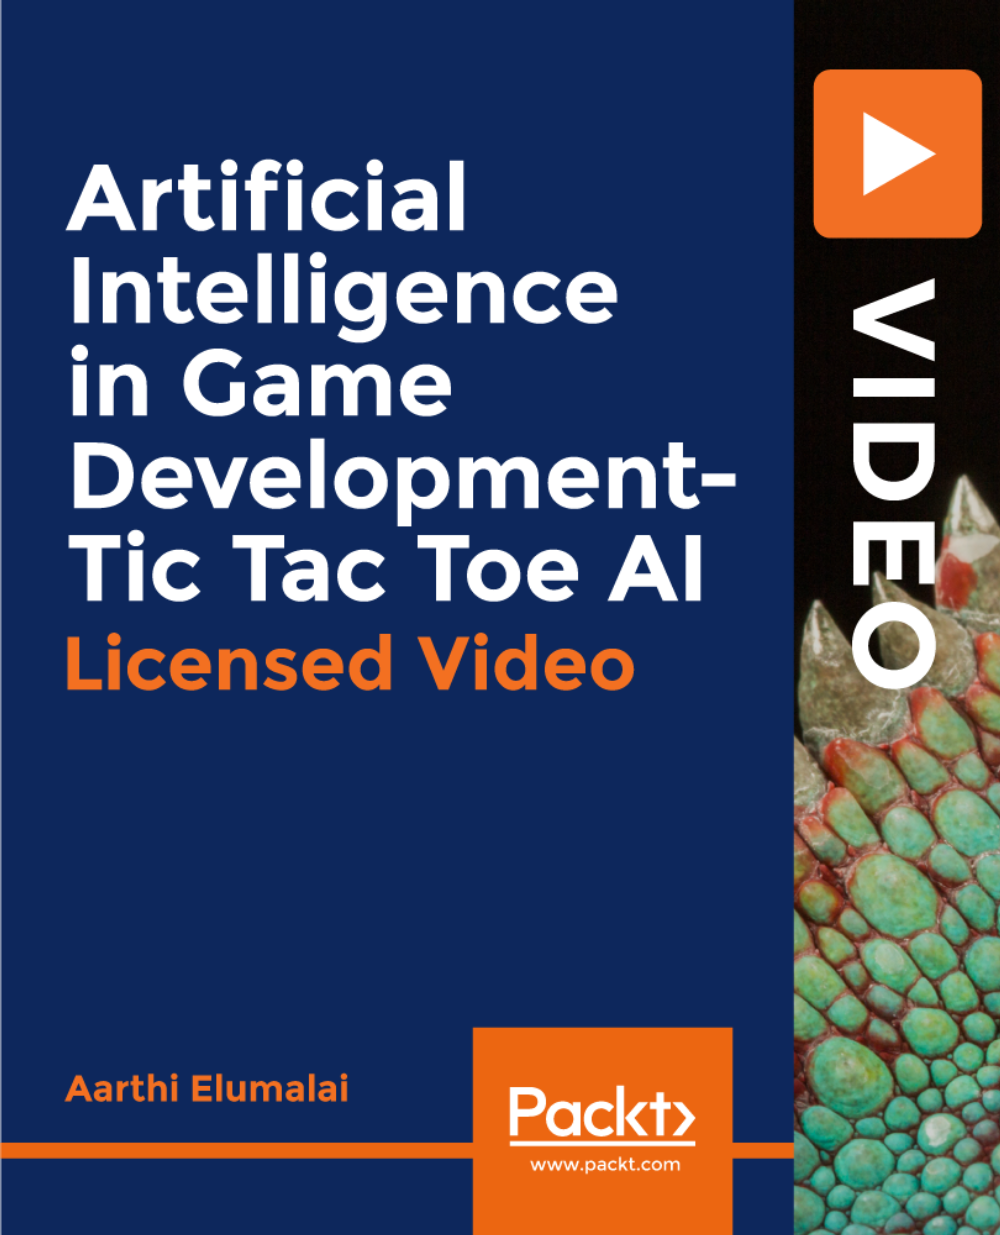 Artificial Intelligence in Game Development- Tic Tac Toe AI